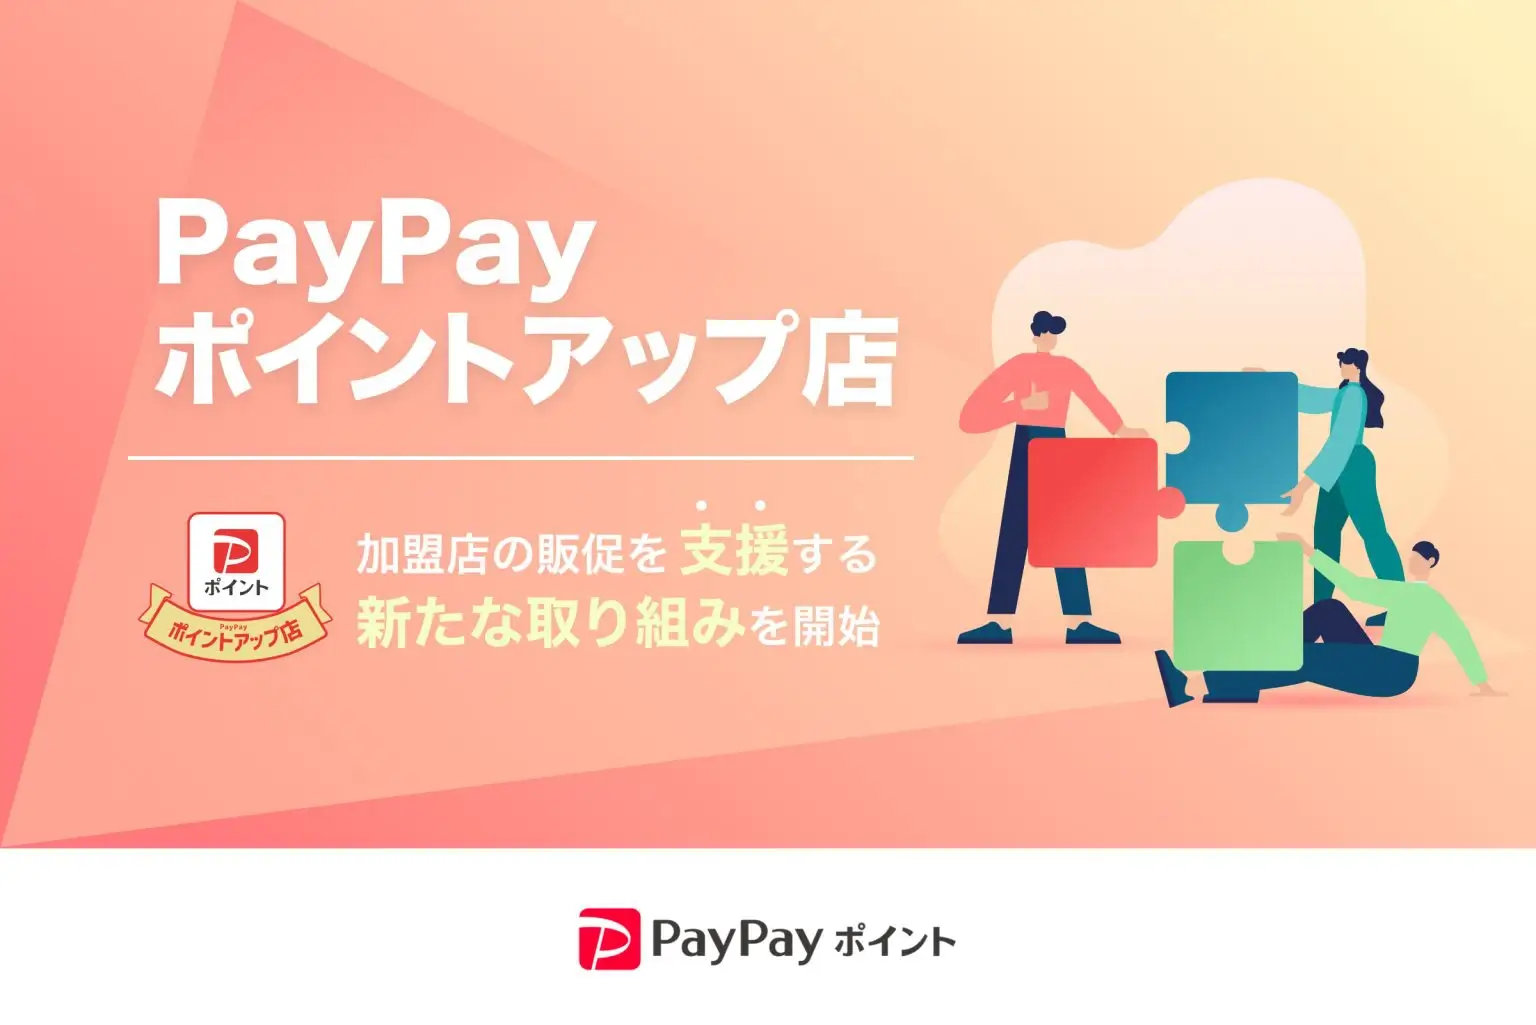 PayPay（ペイペイ）ポイントアップ店の取り組み開始！2023年9月から「ウエルシア」「WINTICKET」と提携